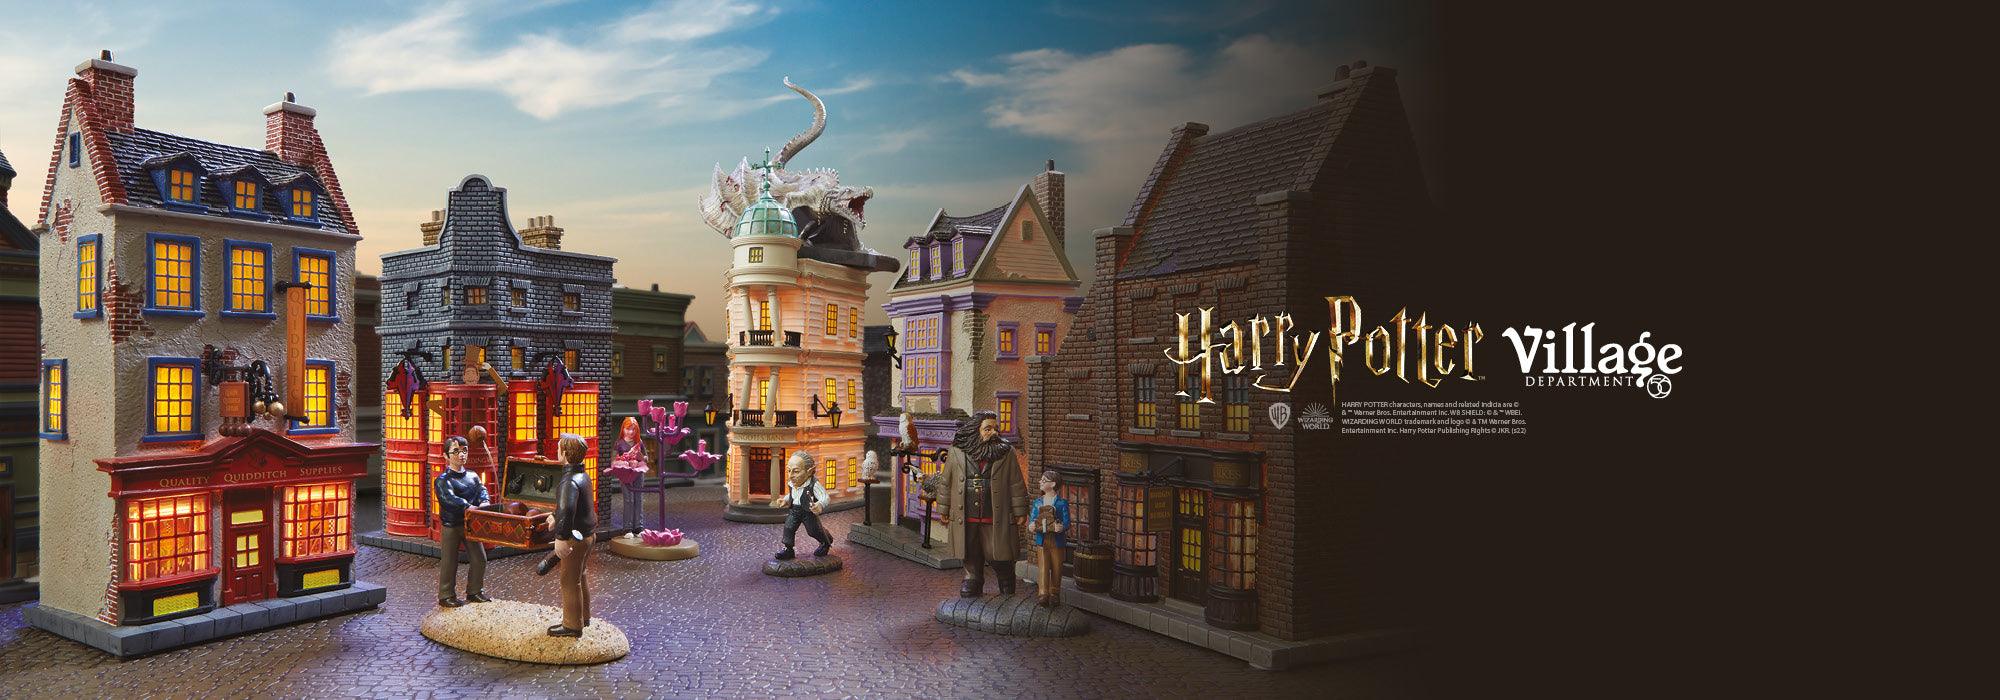 Harry Potter Village | Enesco Gift Shop